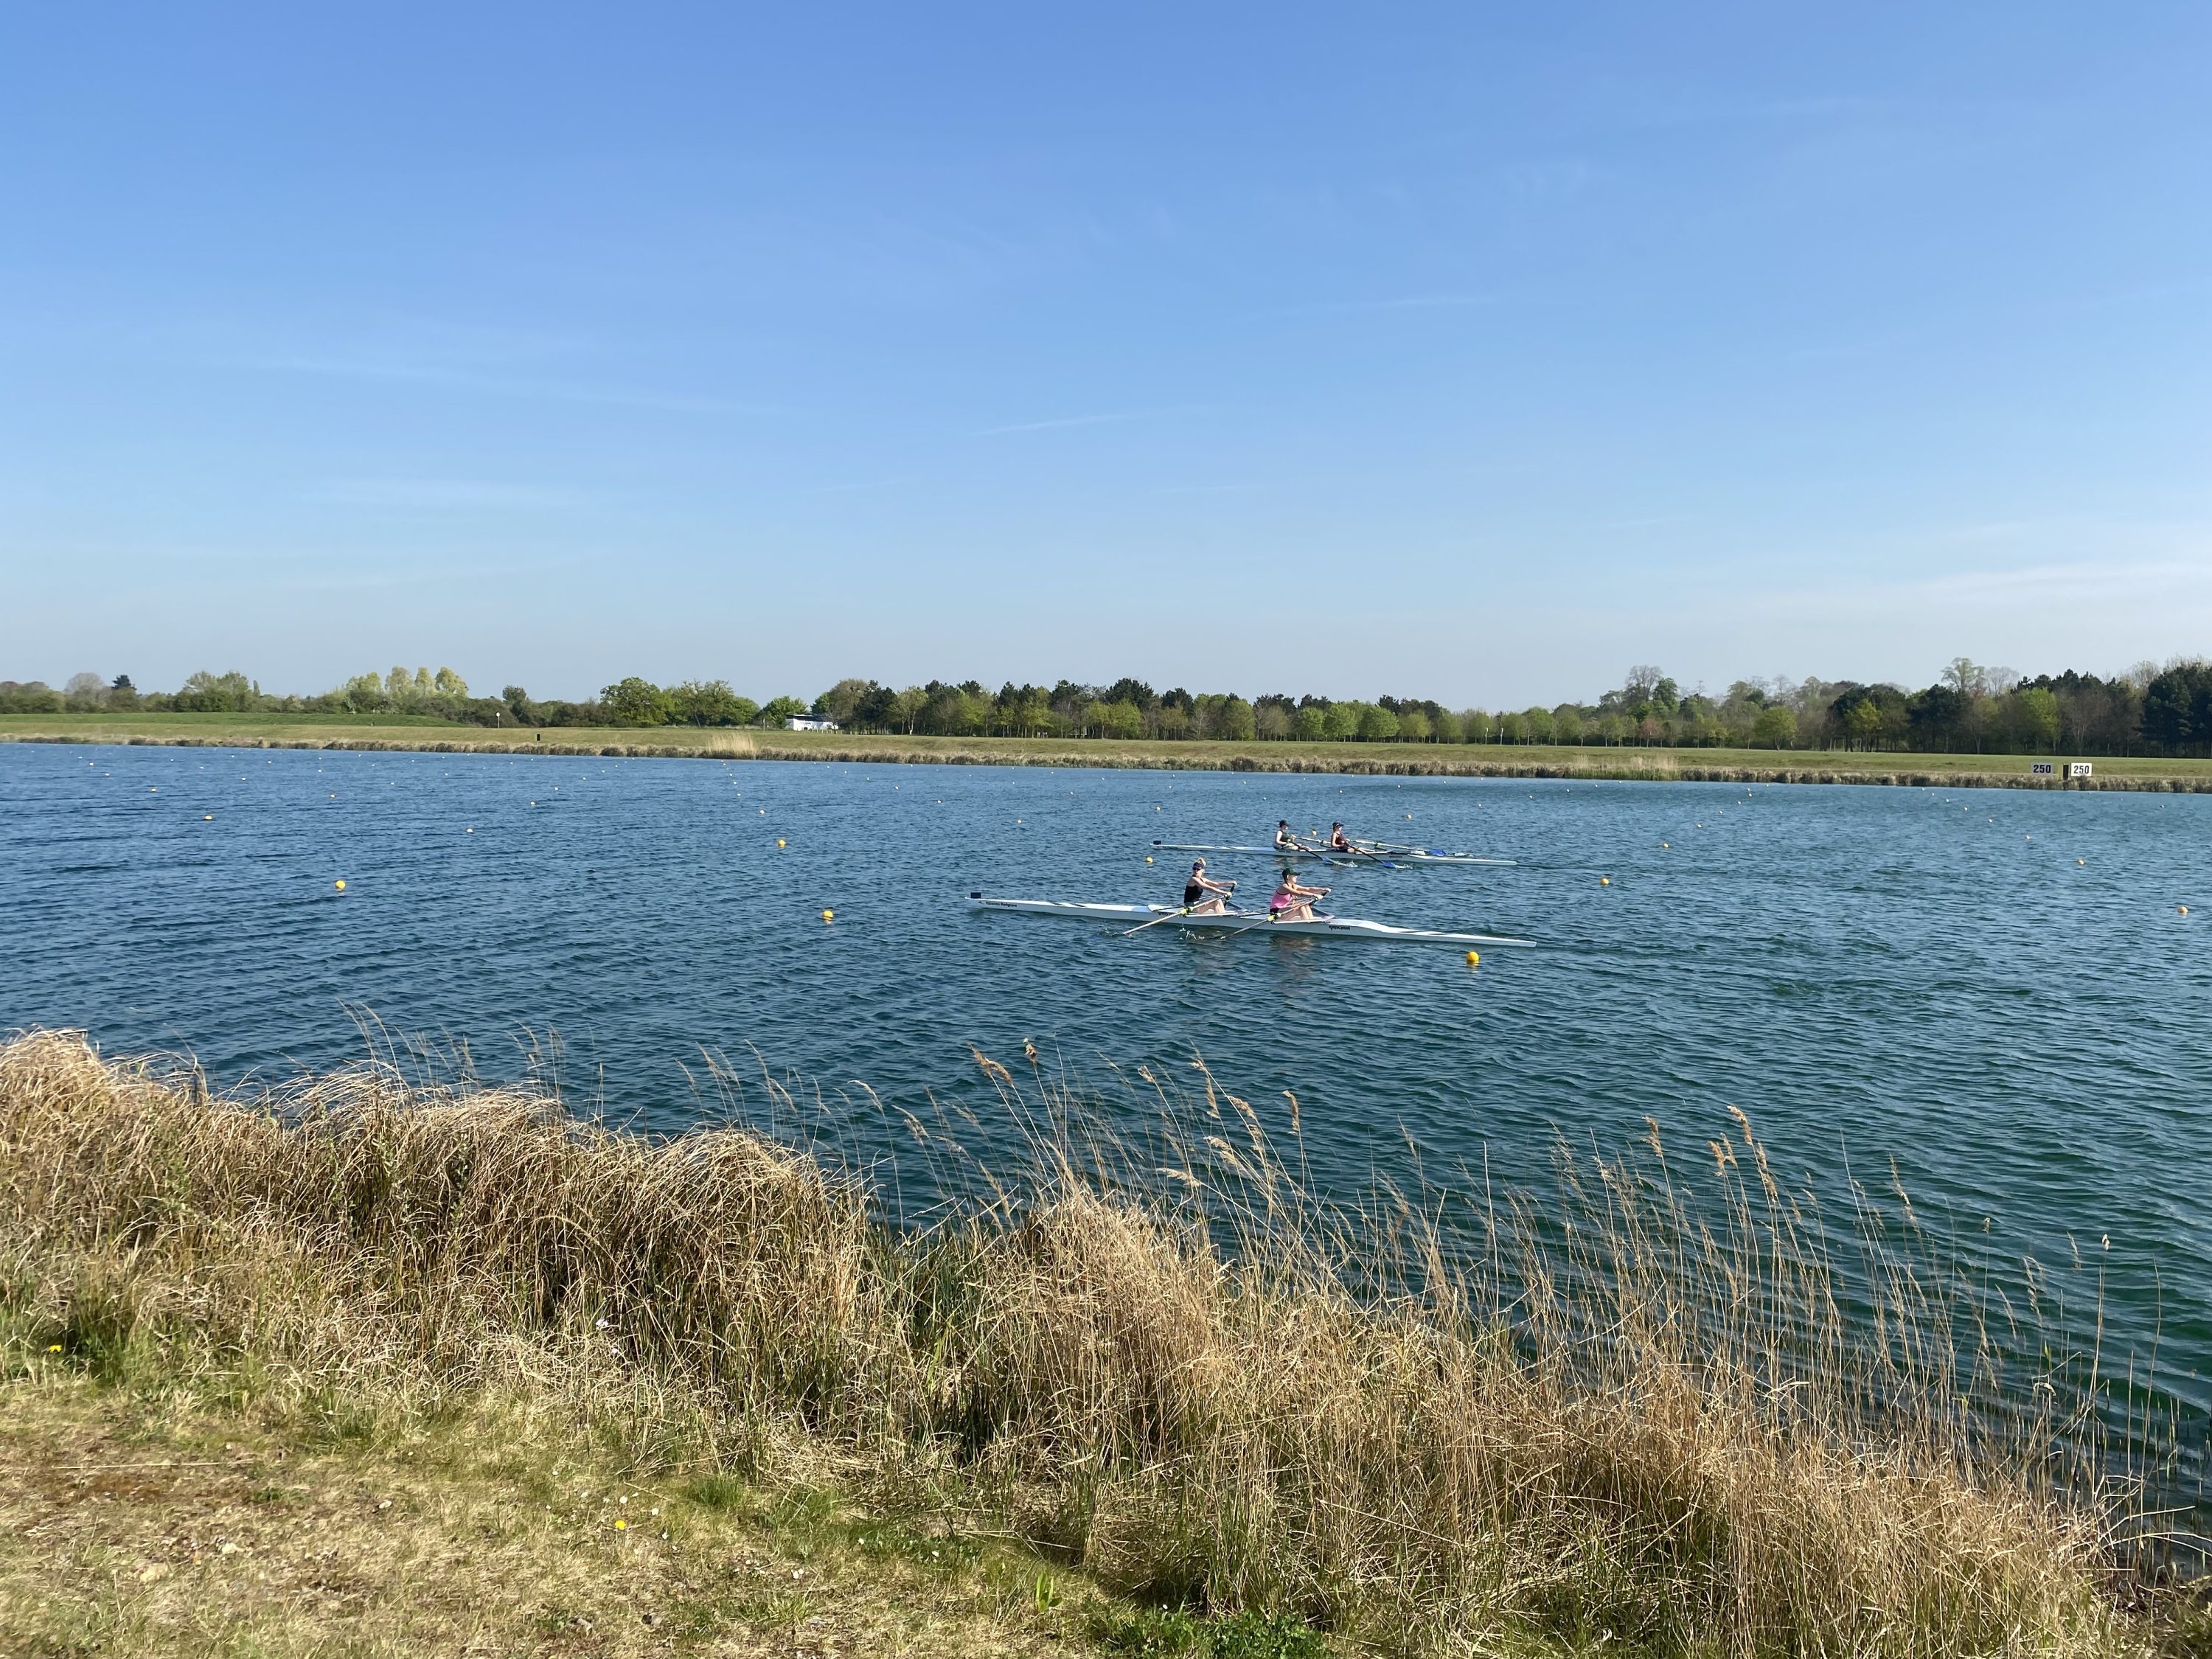 Rowing at Buckinghamshire’s, Dorney Lake